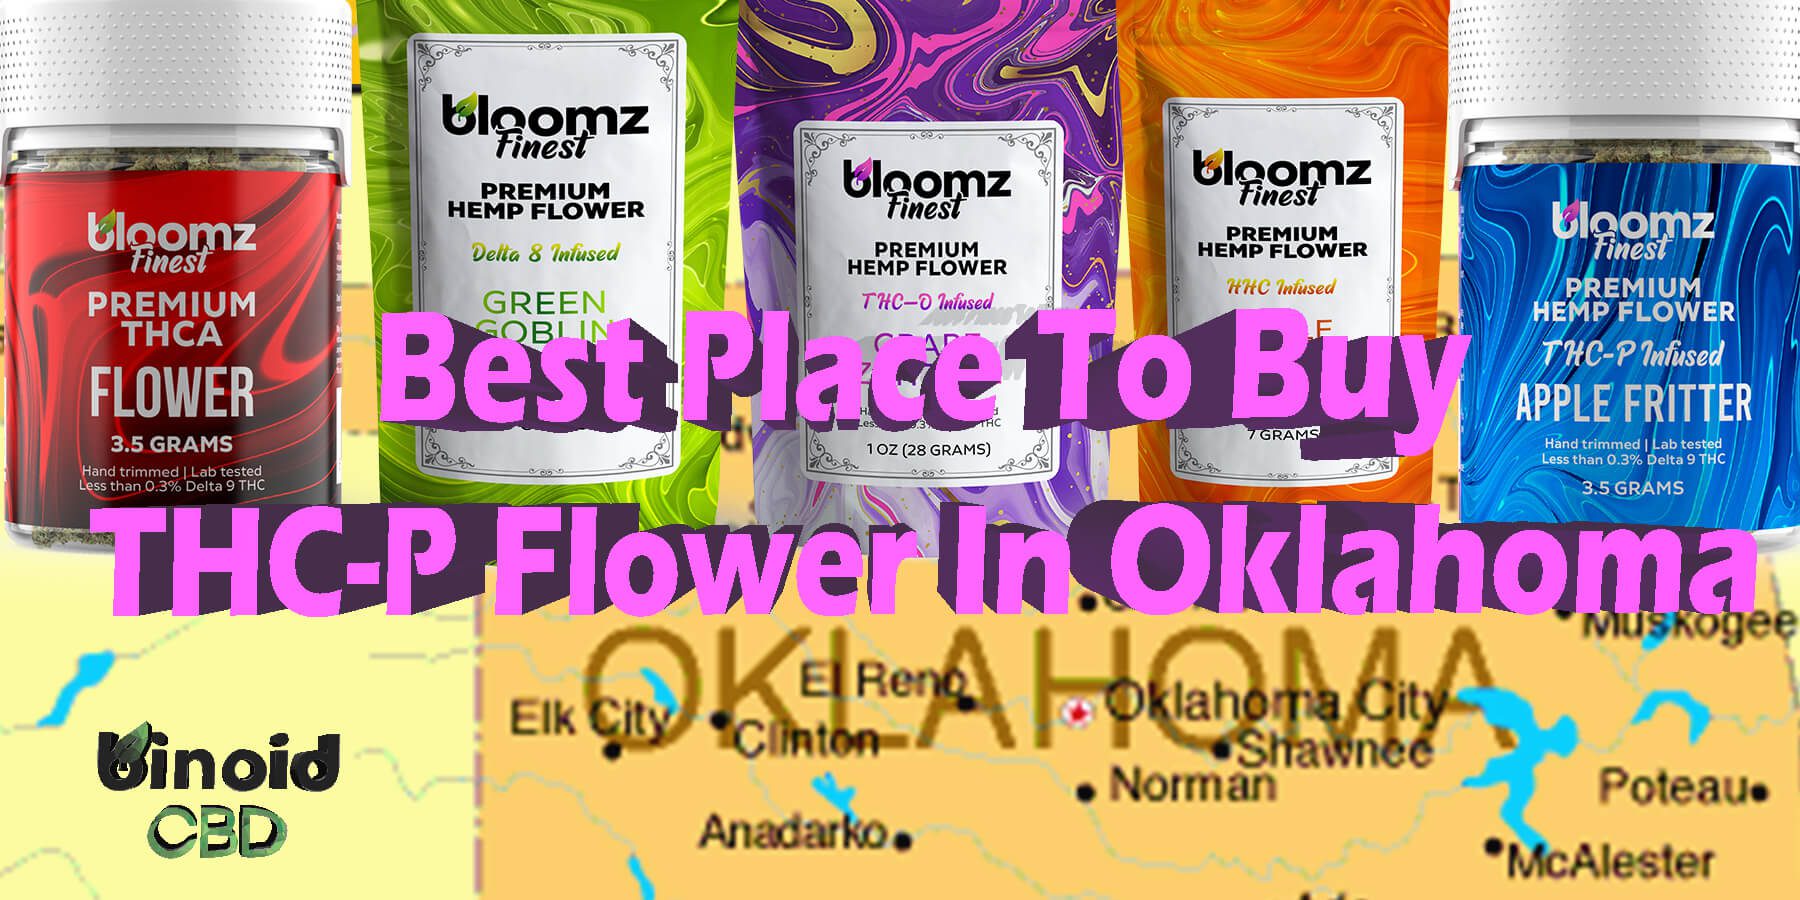 Buy THCP Flower Oklahoma Get Online Near Me For Sale Best Brand Strongest Real Legal Store Shop Reddit